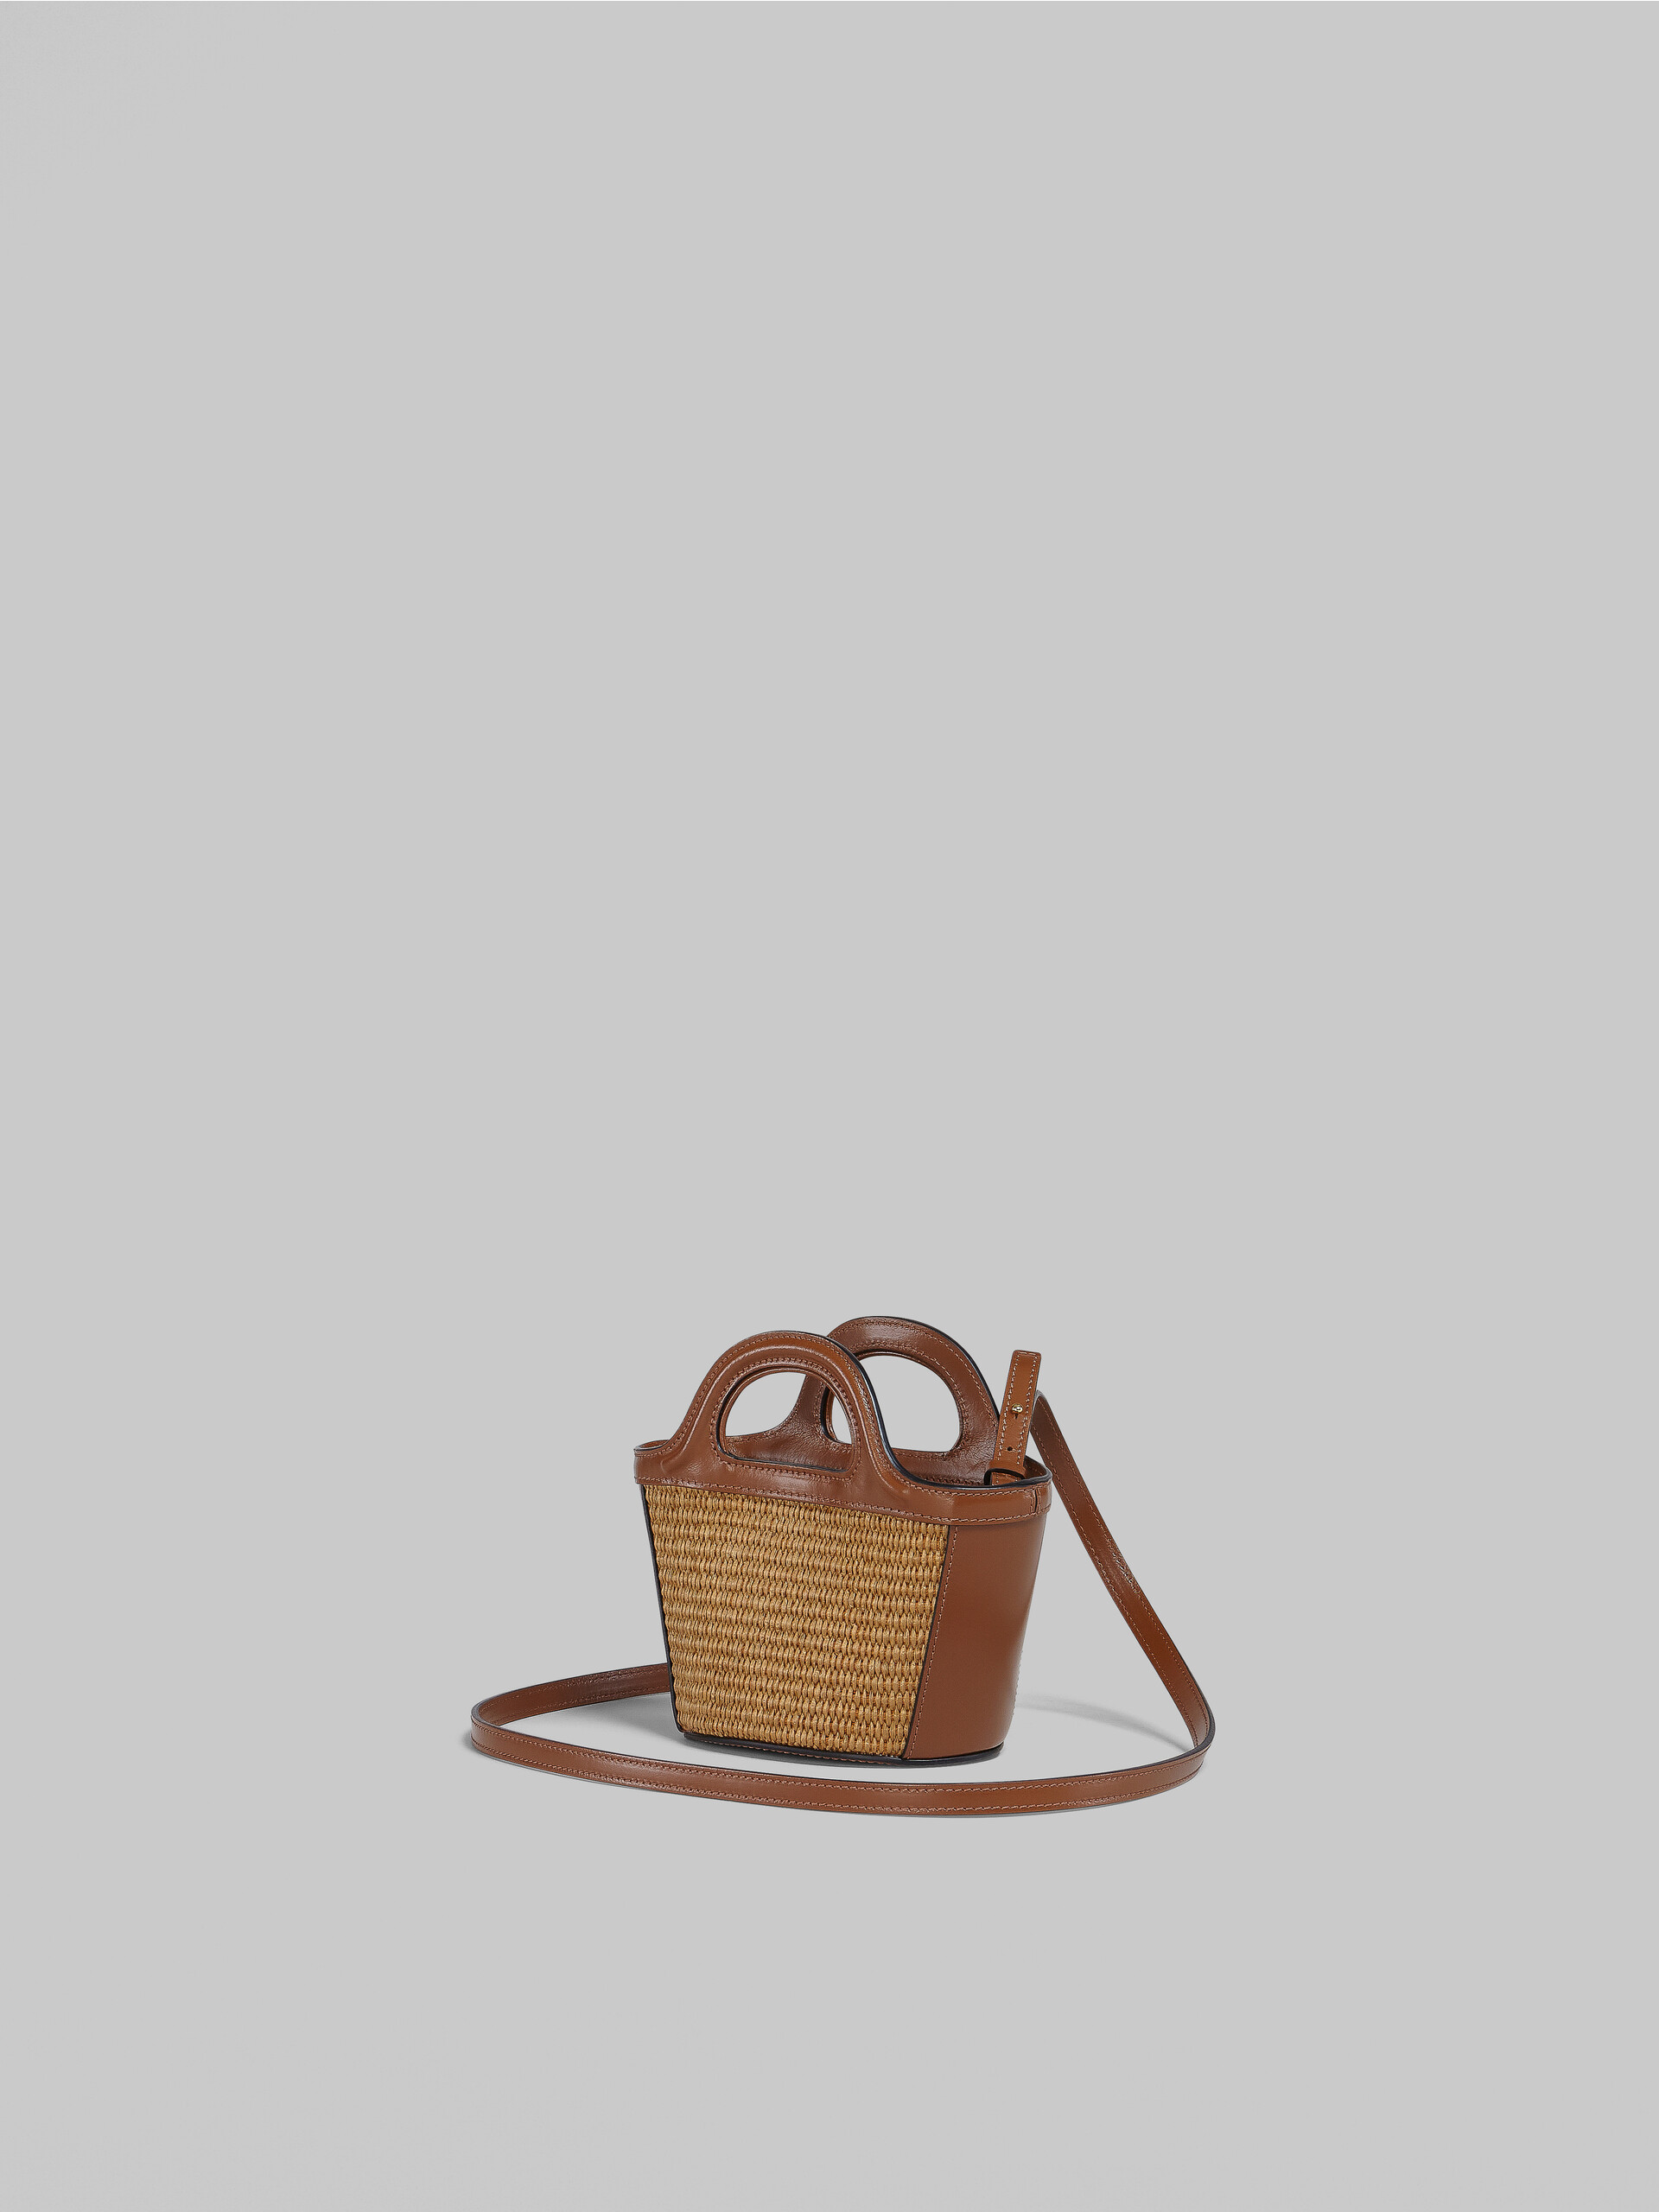 TROPICALIA micro bag in brown leather and raffia - Handbag - Image 3